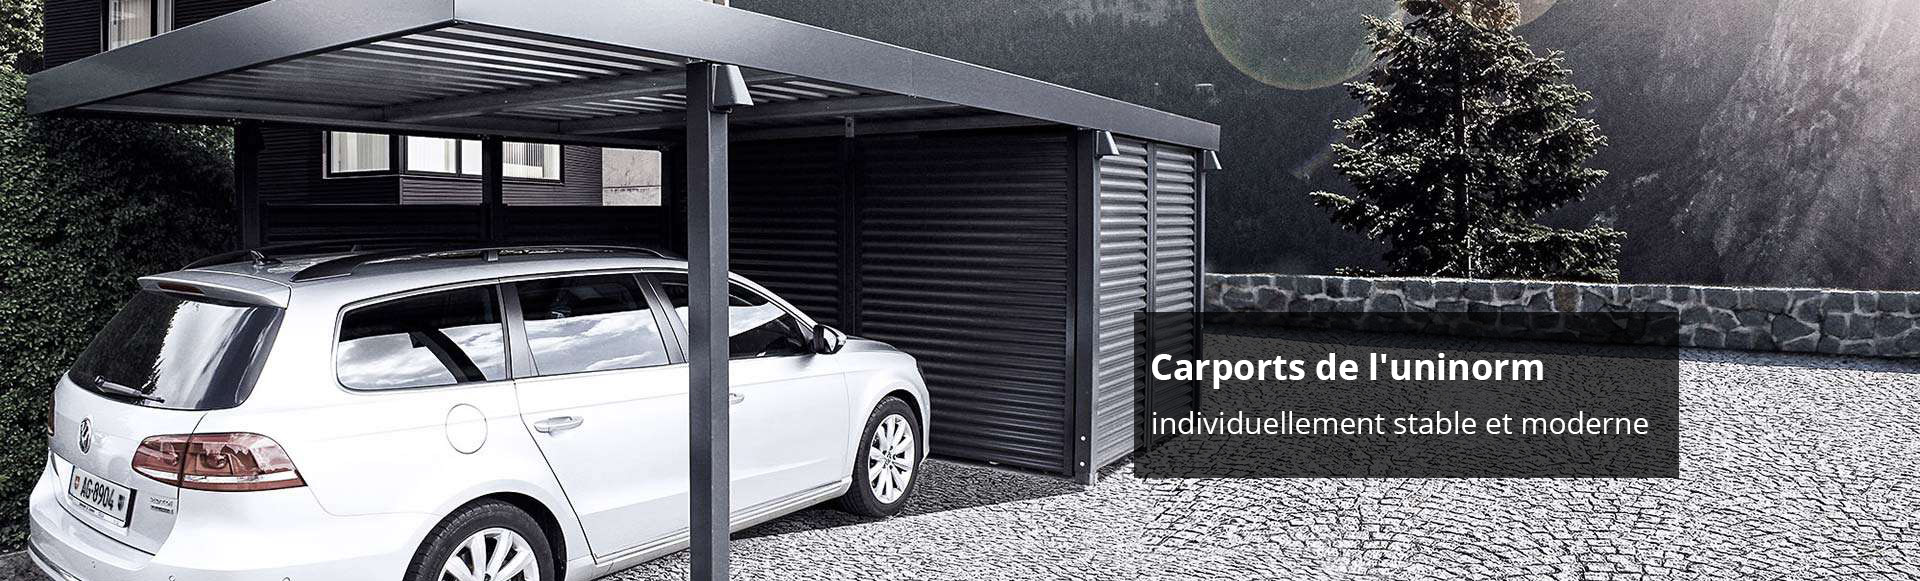 carport metal uninorm